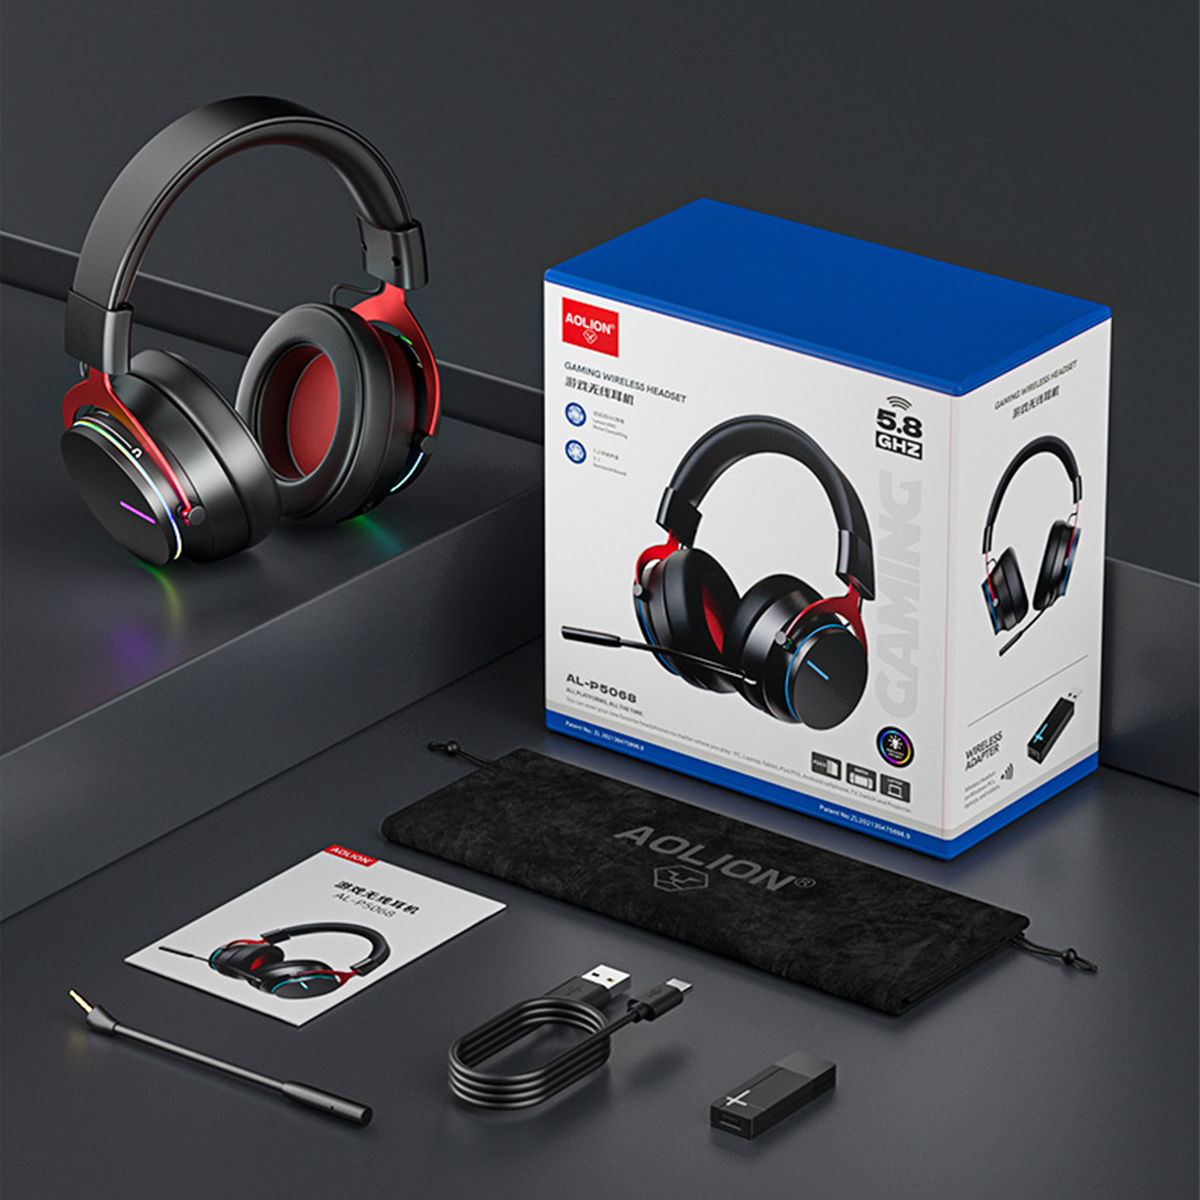 schwarz Kopfhörer Bluetooth geräuschunterdrückendem Over-ear Bluetooth Gaming-Headset mit Mikrofon KINSI Gaming-Headset, 5.8G